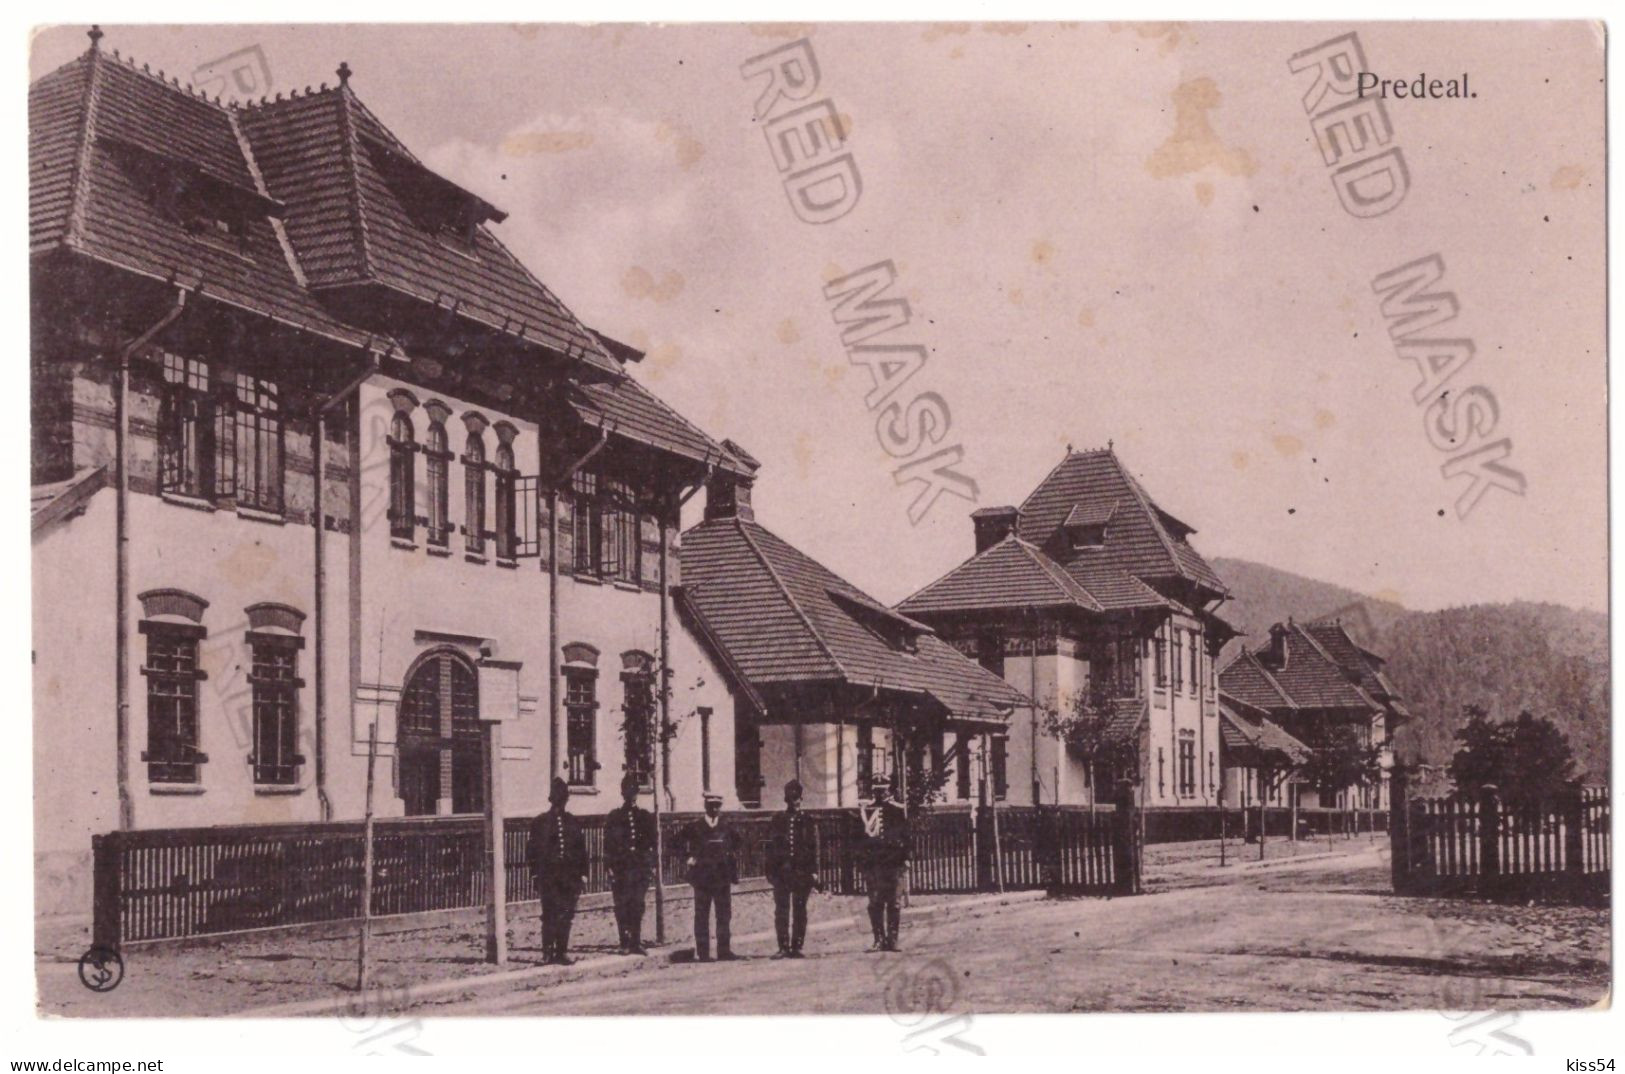 RO 86 - 21217 PREDEAL, Brasov, Romania - Old Postcard - Used - 1917 - Romania